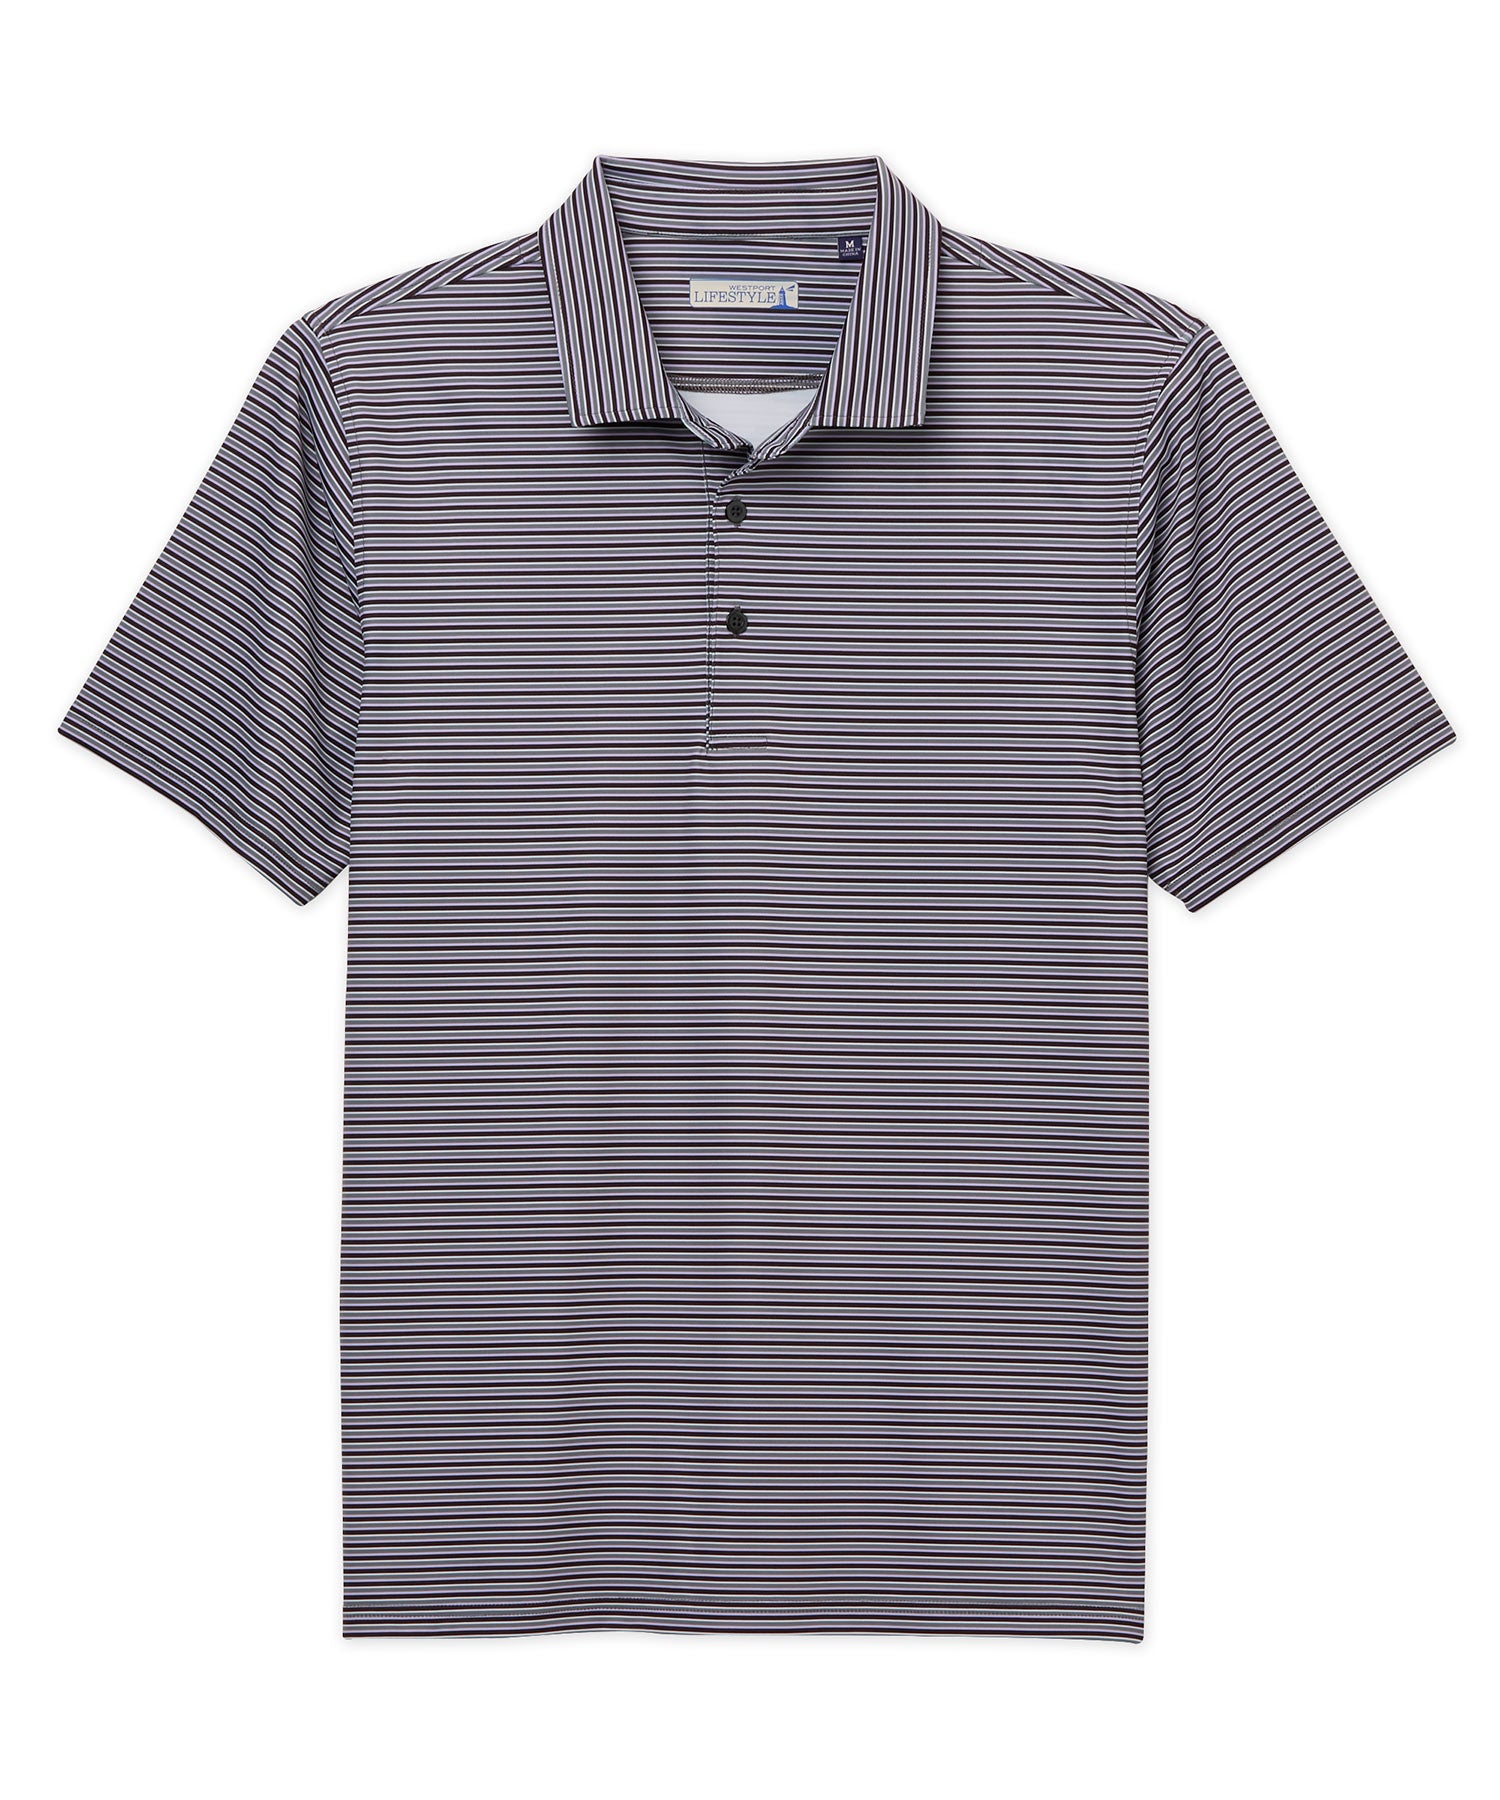 Westport Lifestyle Shadow Stripe Performance Polo Knit Shirt, Men's Big & Tall